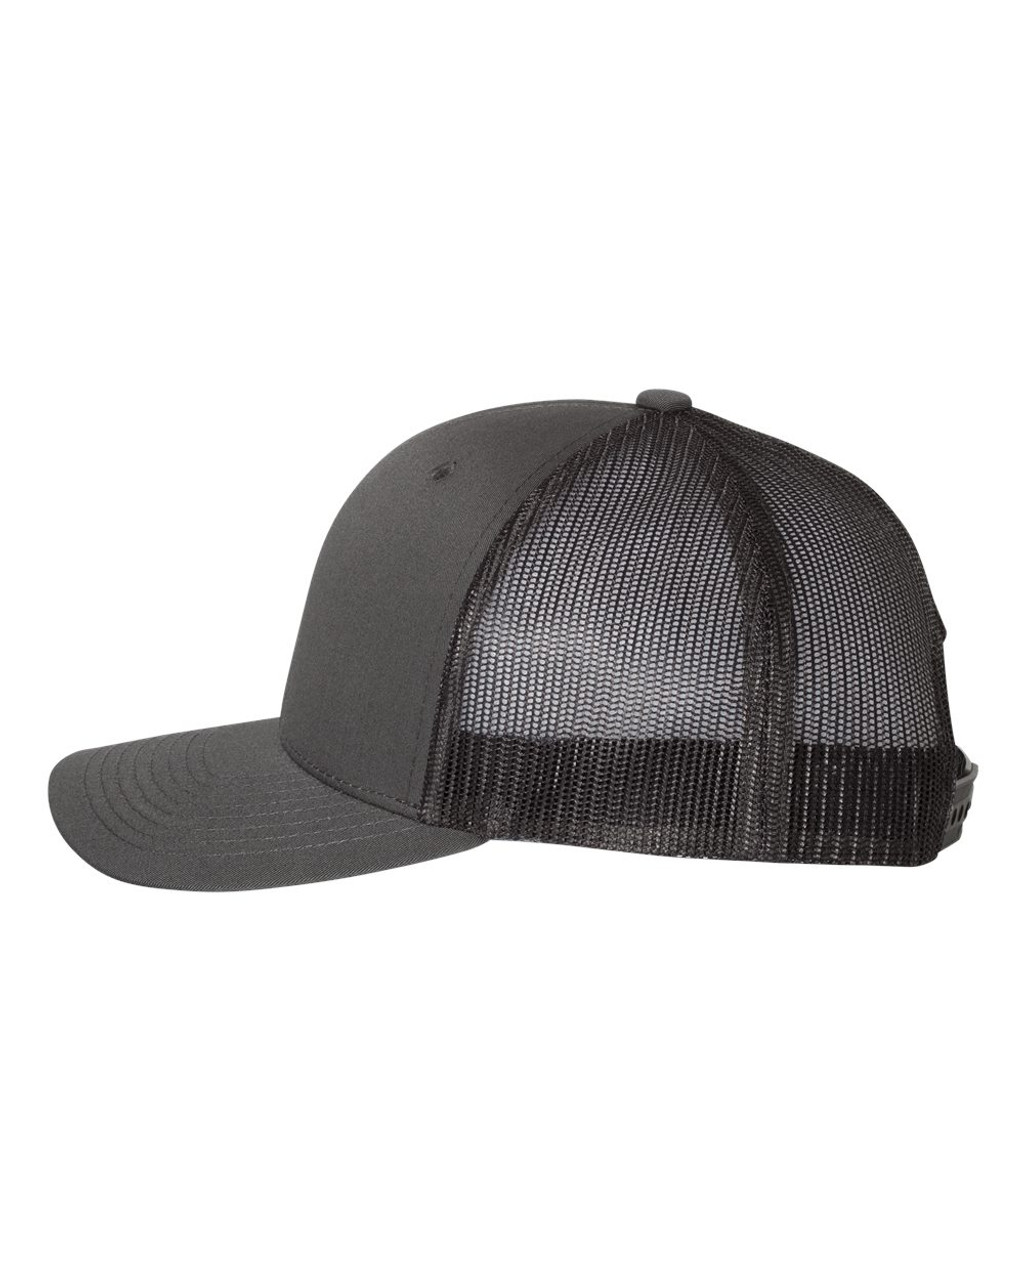 Dimebag Original Raxor Darrell Heat Pressed Grey on Black Curved Bill Hat - Adult Mesh Trucker Snap Back Cap